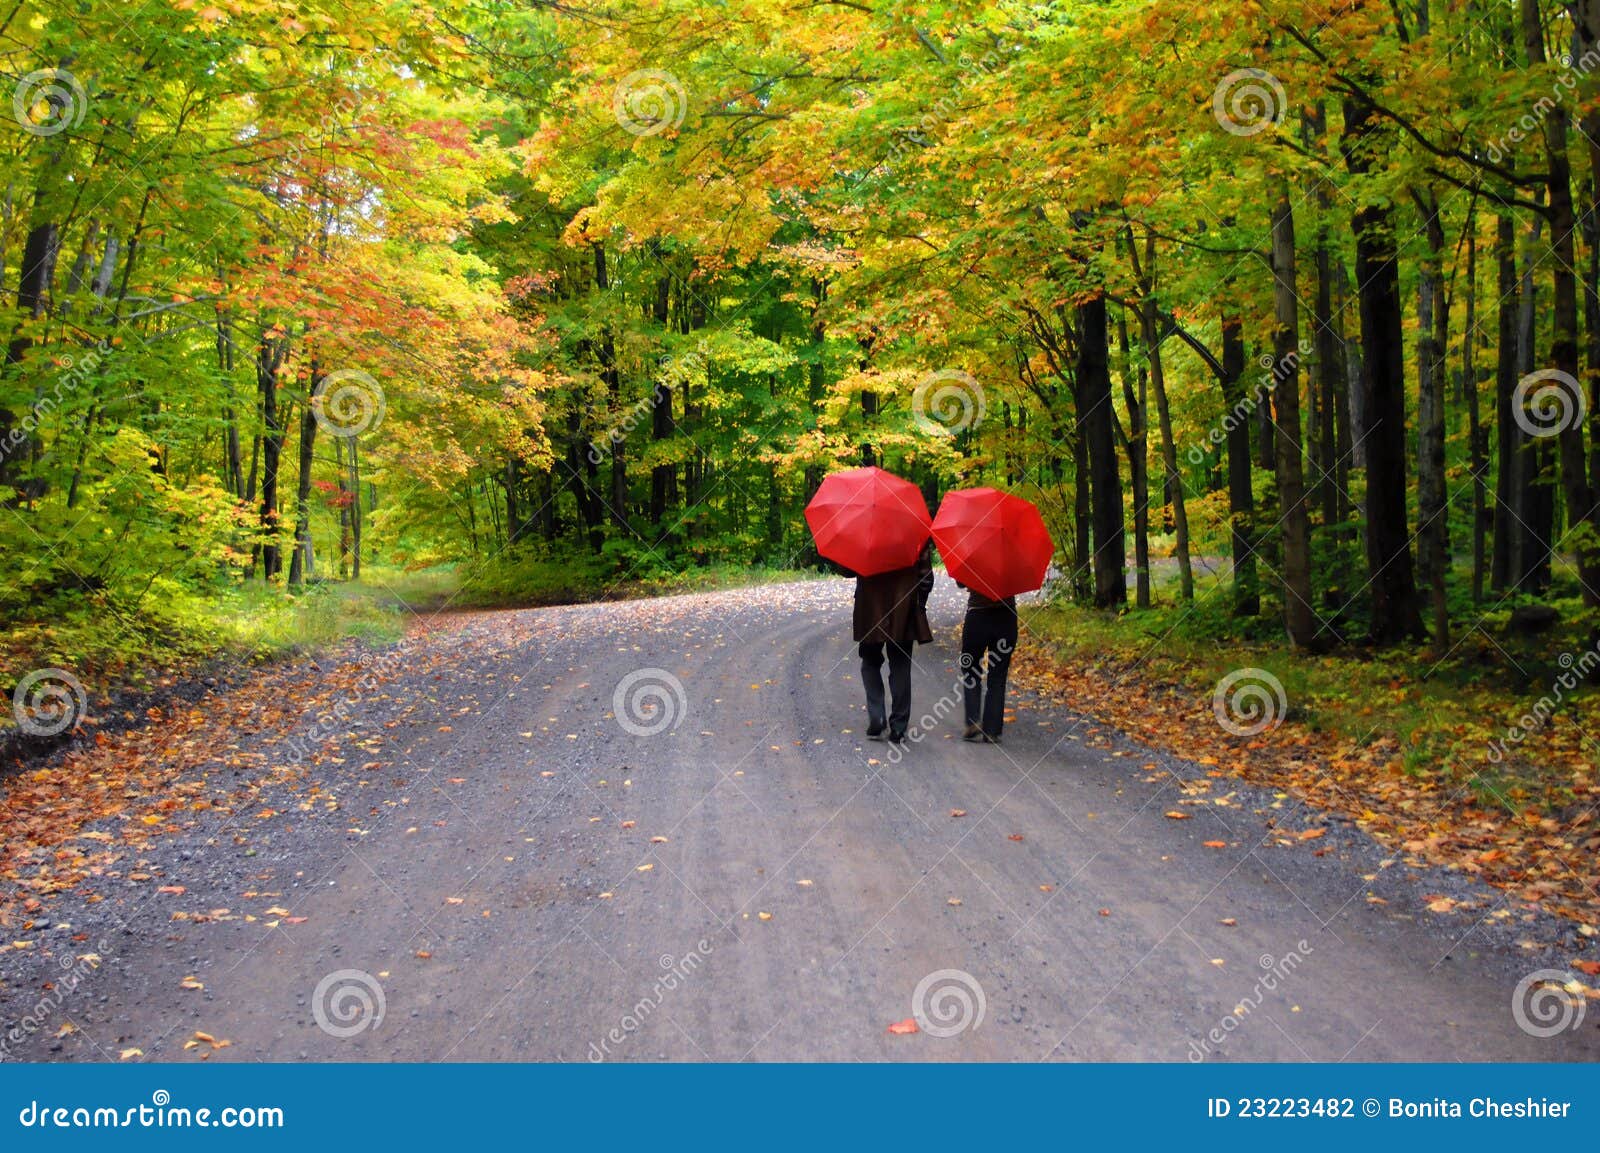 couple beneath red umbrellas